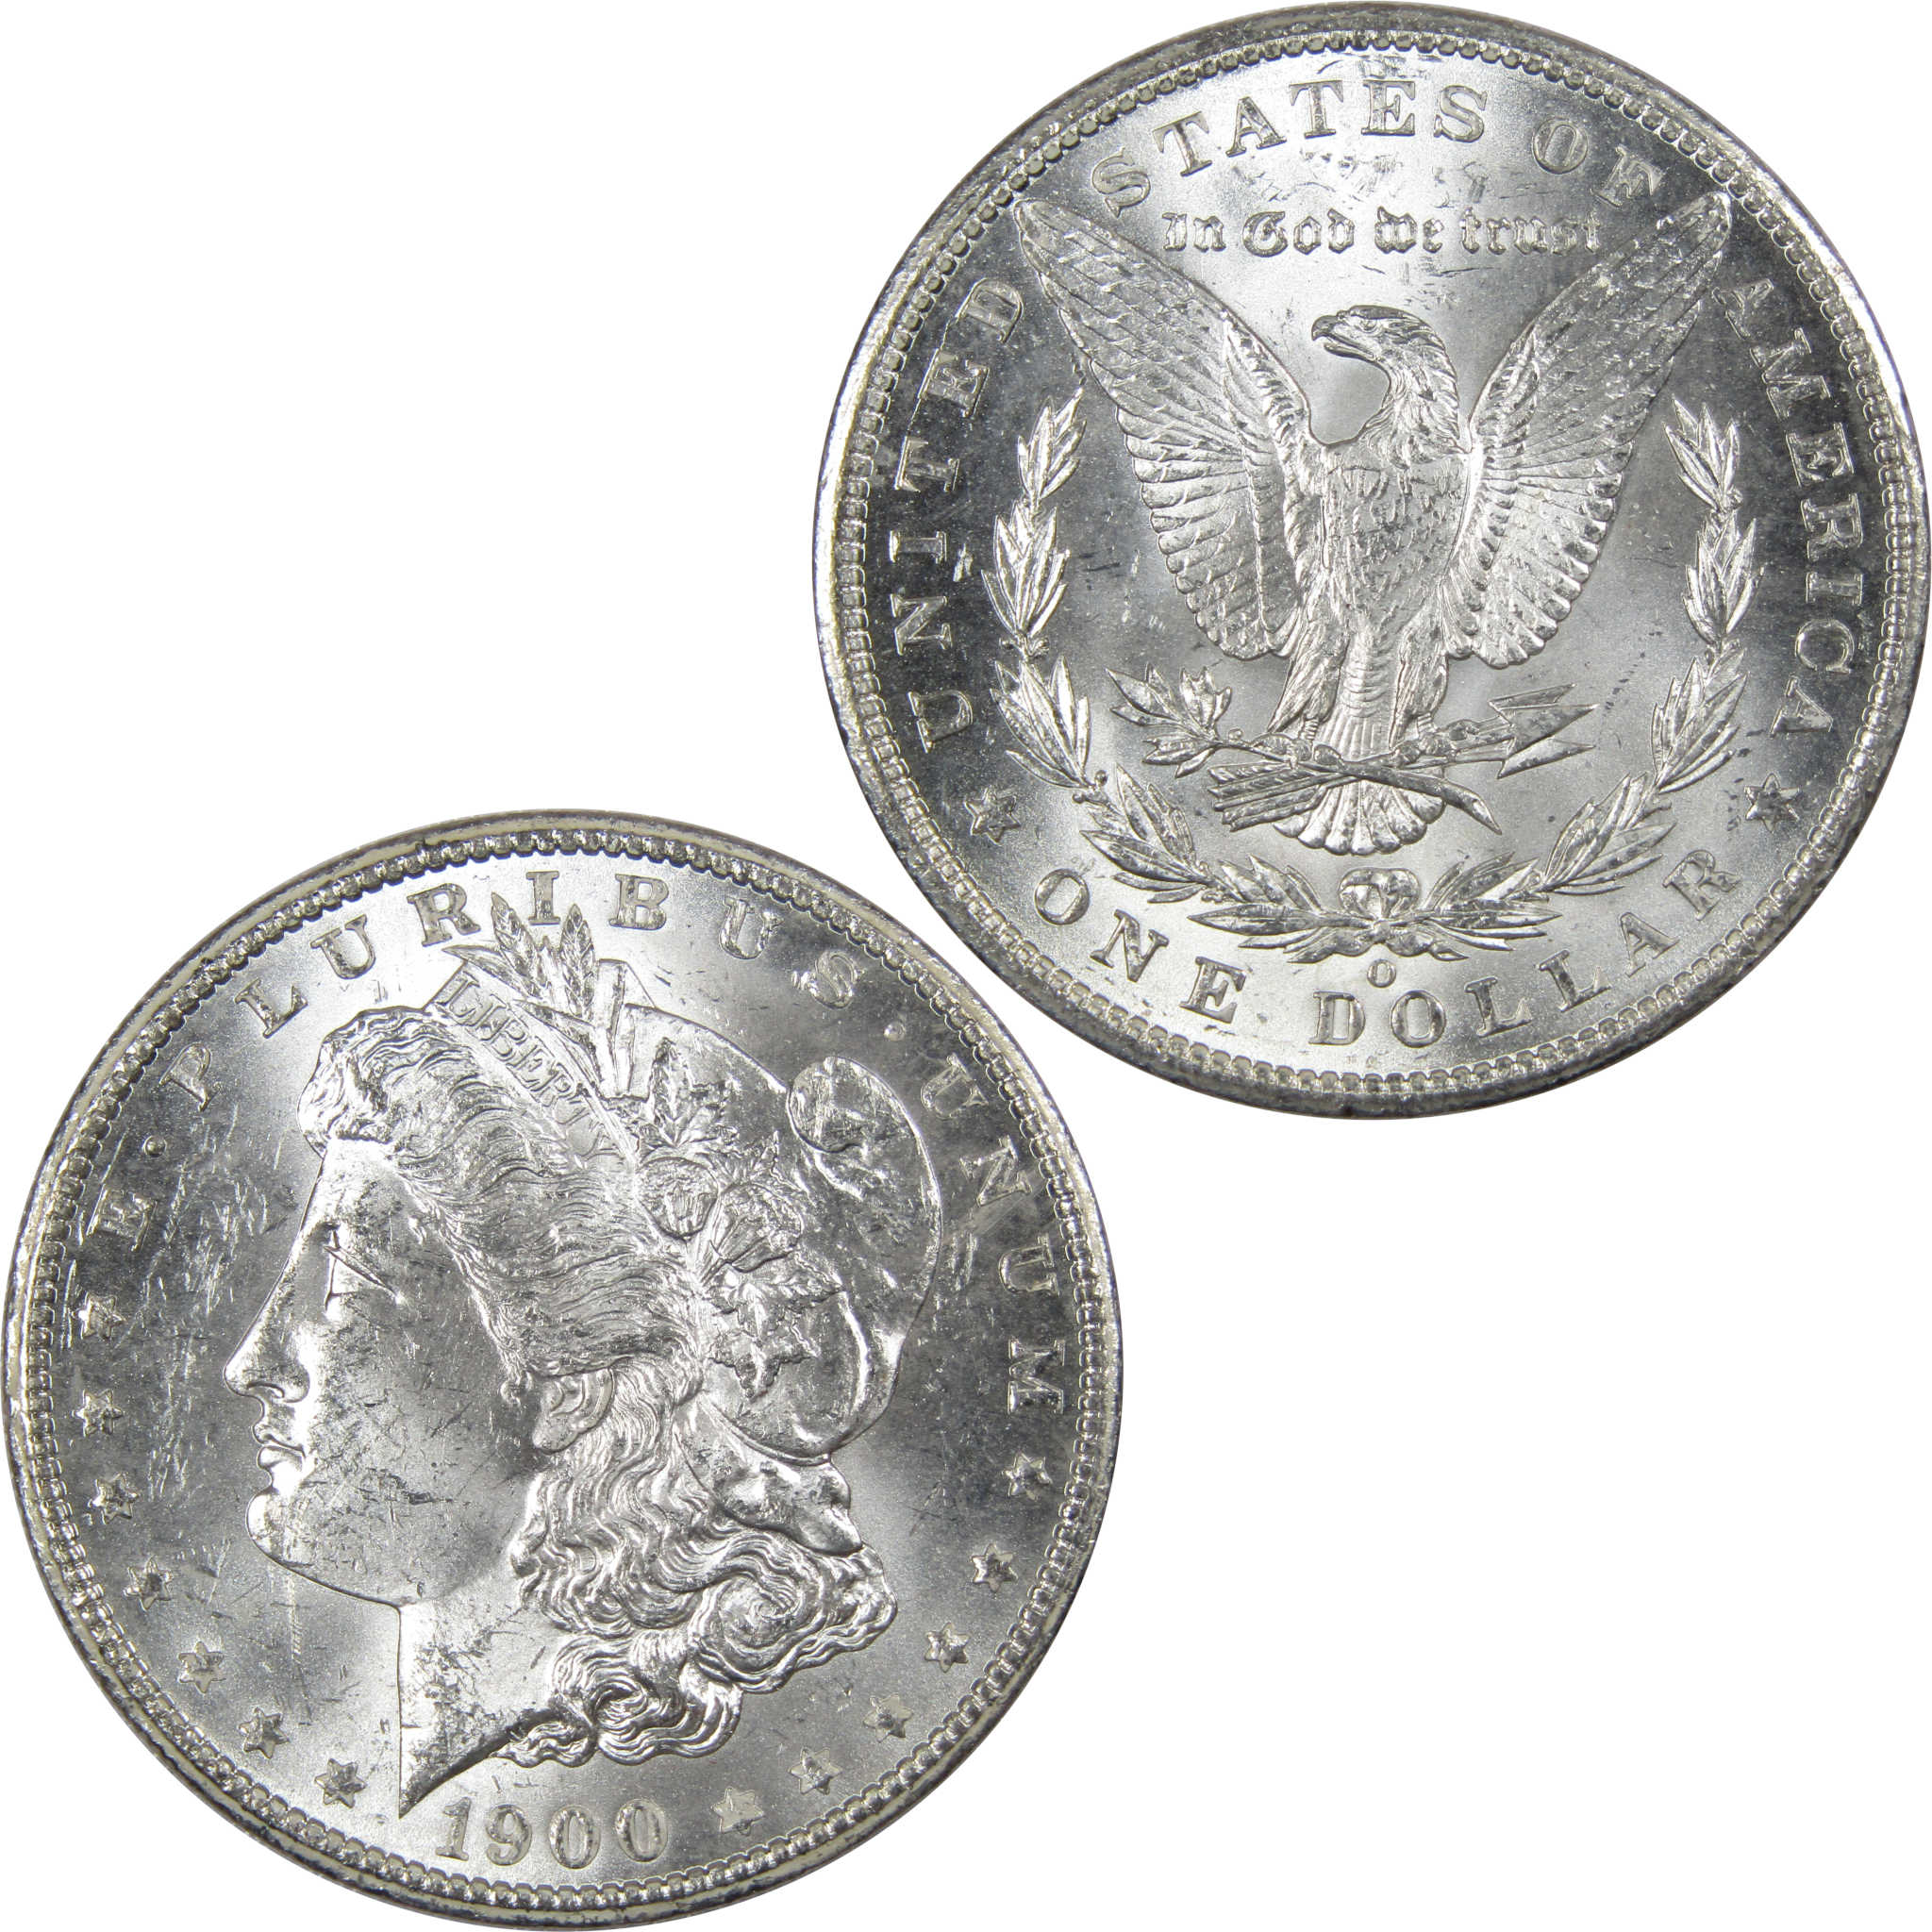 1900 O Morgan Dollar BU Uncirculated Mint State 90% Silver SKU:IPC9747 - Morgan coin - Morgan silver dollar - Morgan silver dollar for sale - Profile Coins &amp; Collectibles